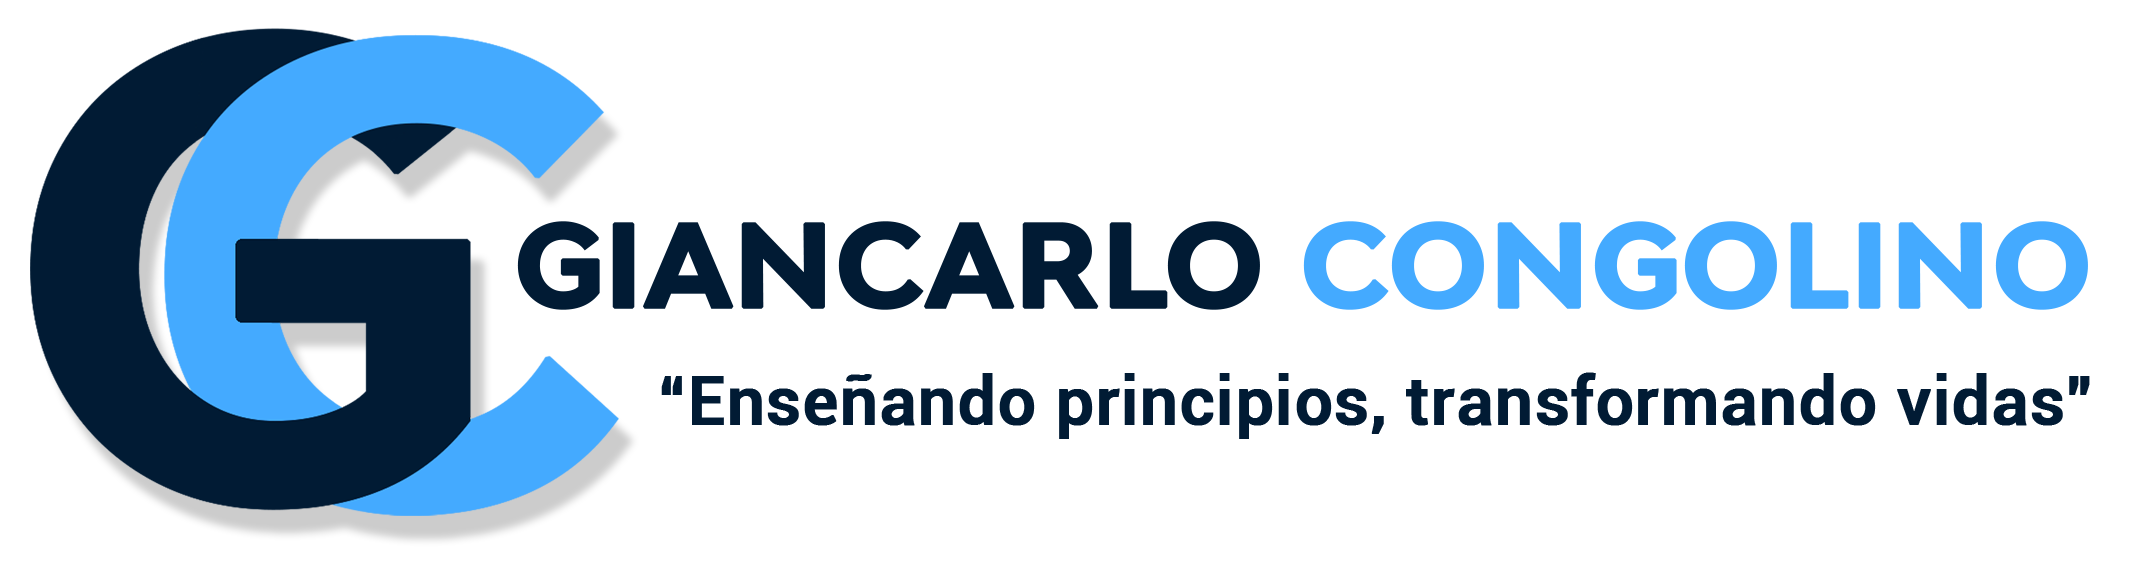 GIANCARLO CONGOLINO/INTERNATIONAL LEARNING ACADEMY